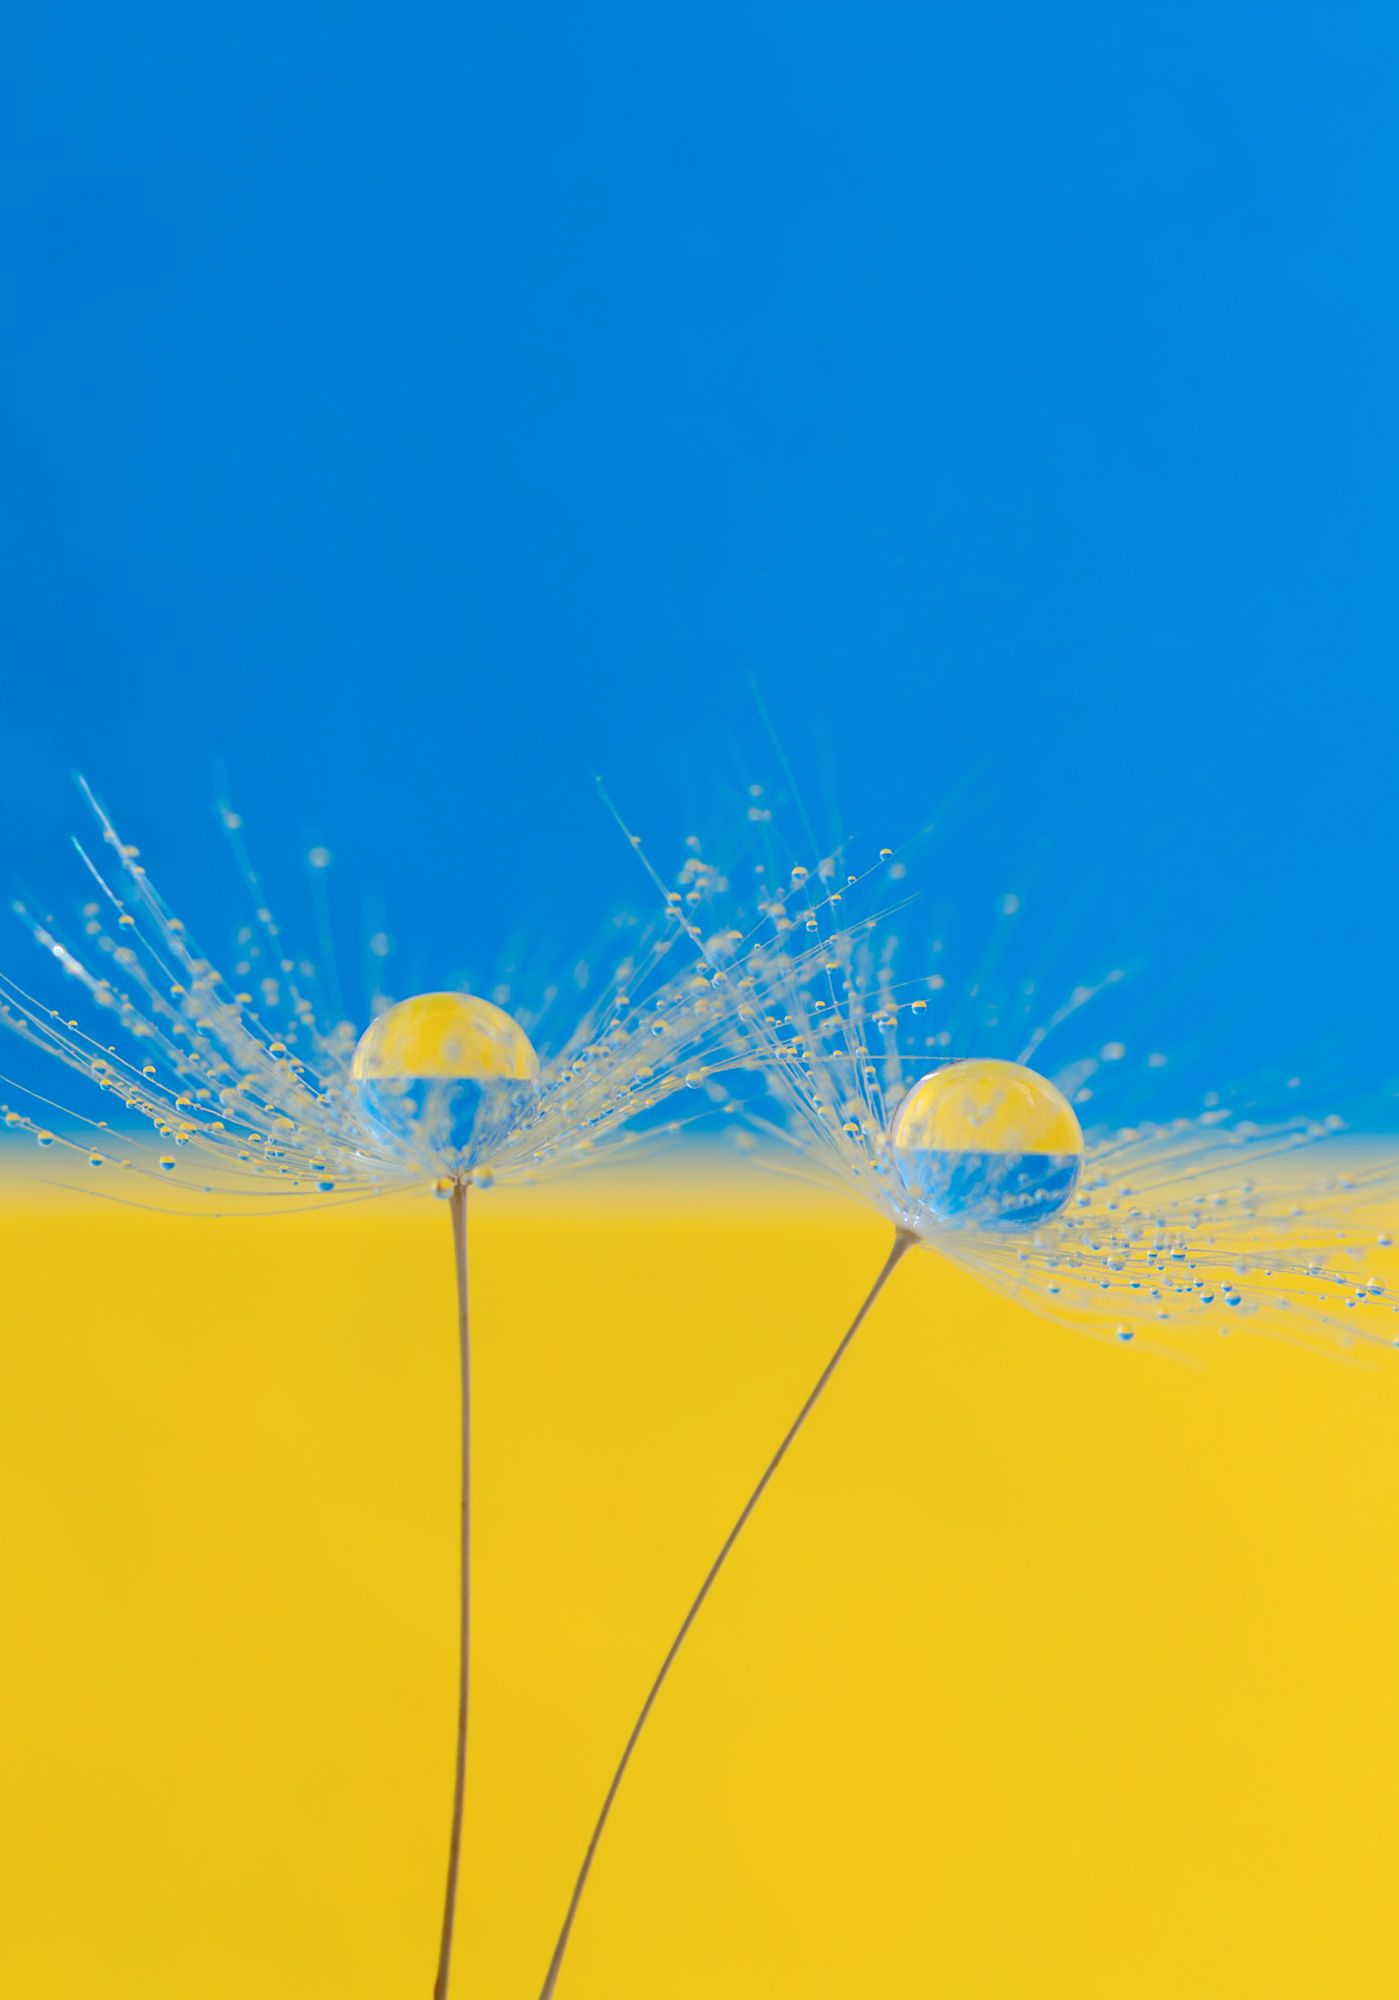 #yellow-blue #dandelion #drops #nature #wallpaper #background #ukraine, Вікторія Крулько